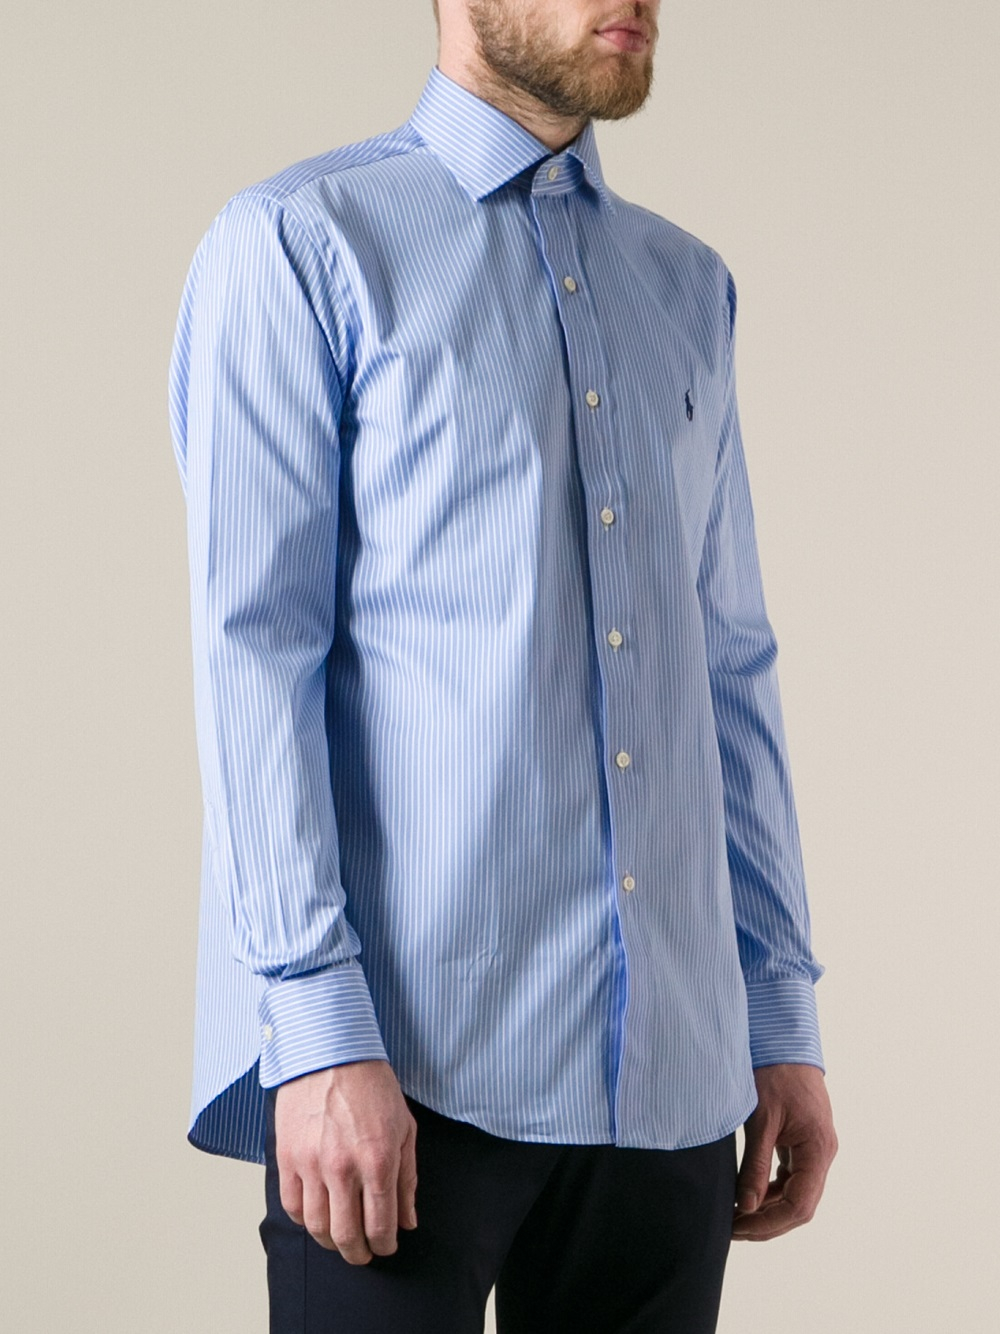 Lyst Polo  Ralph  Lauren  Striped Dress  Shirt  in Blue for Men